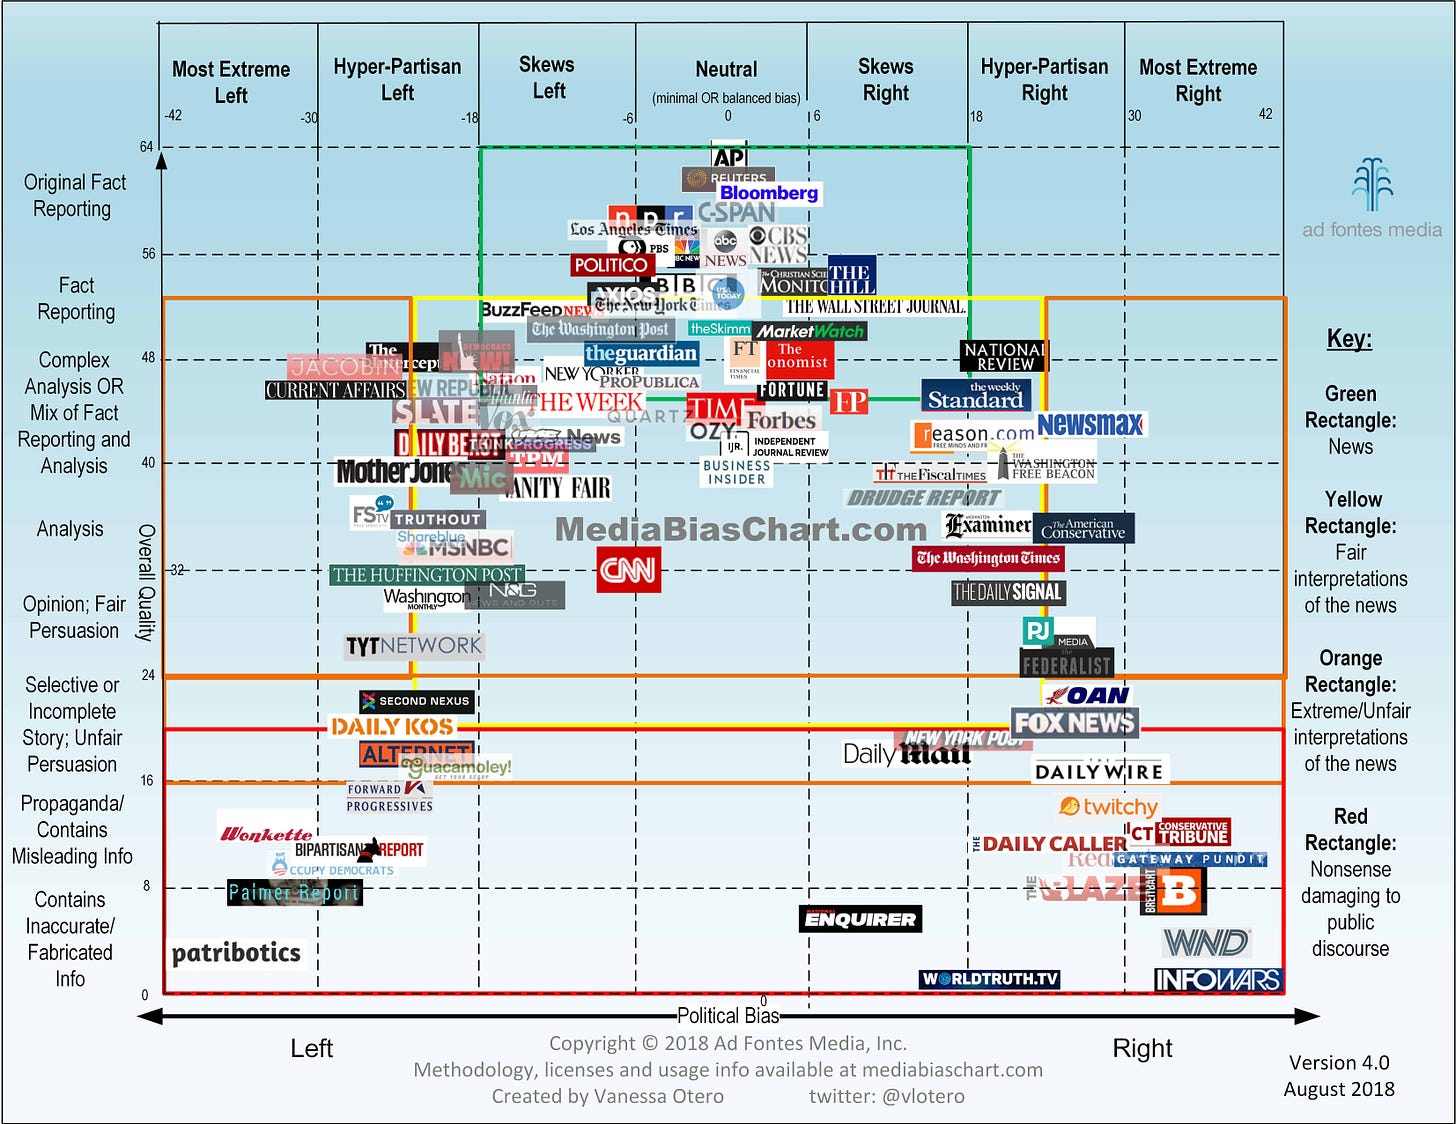 Newer version at source - https://adfontesmedia.com/interactive-media-bias-chart/